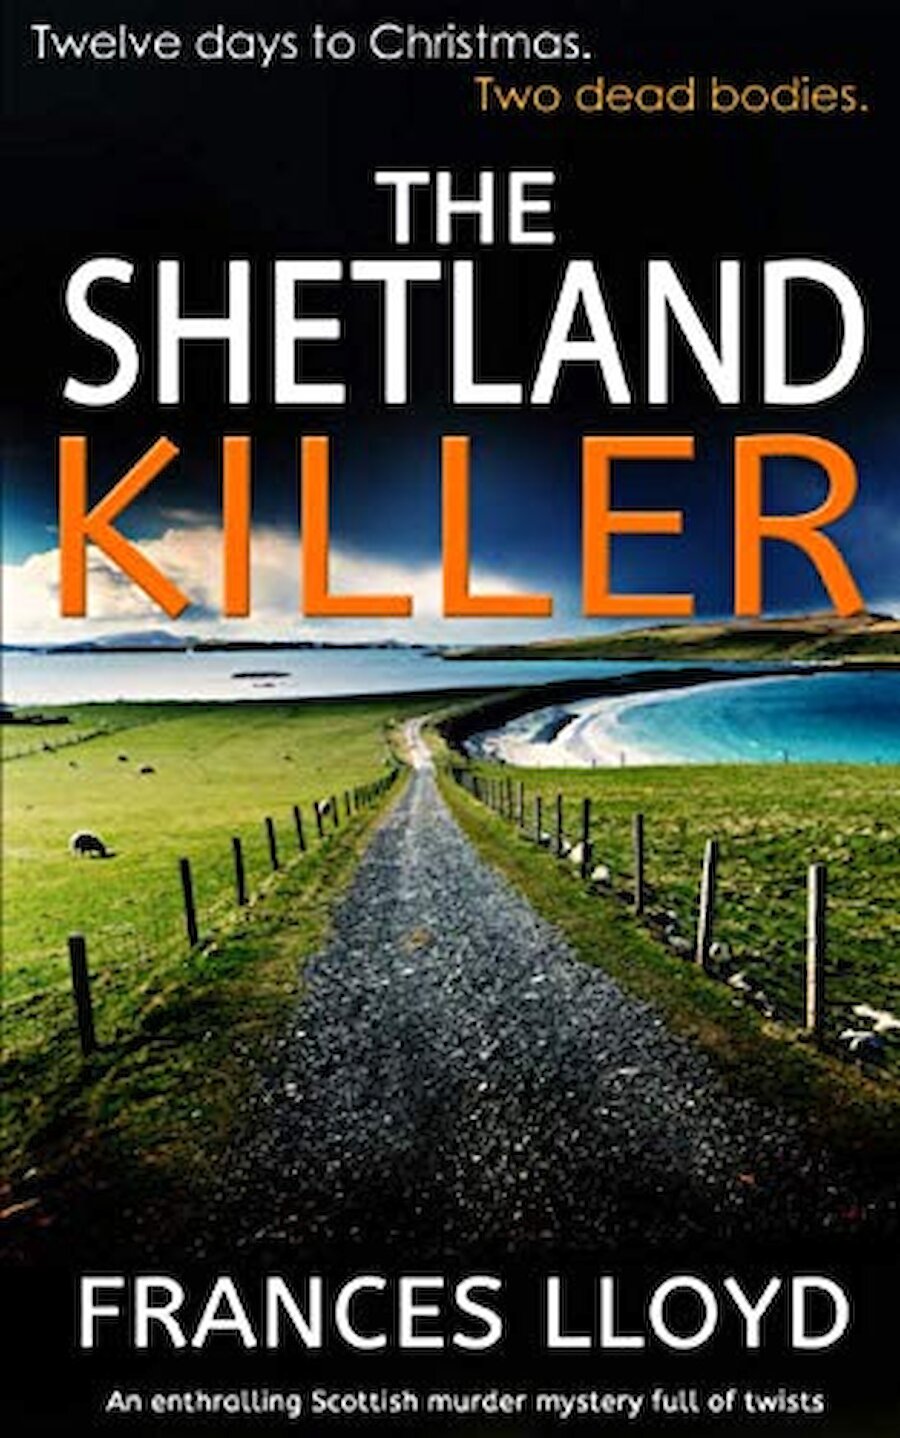 The Shetland Killer by Frances Lloyd